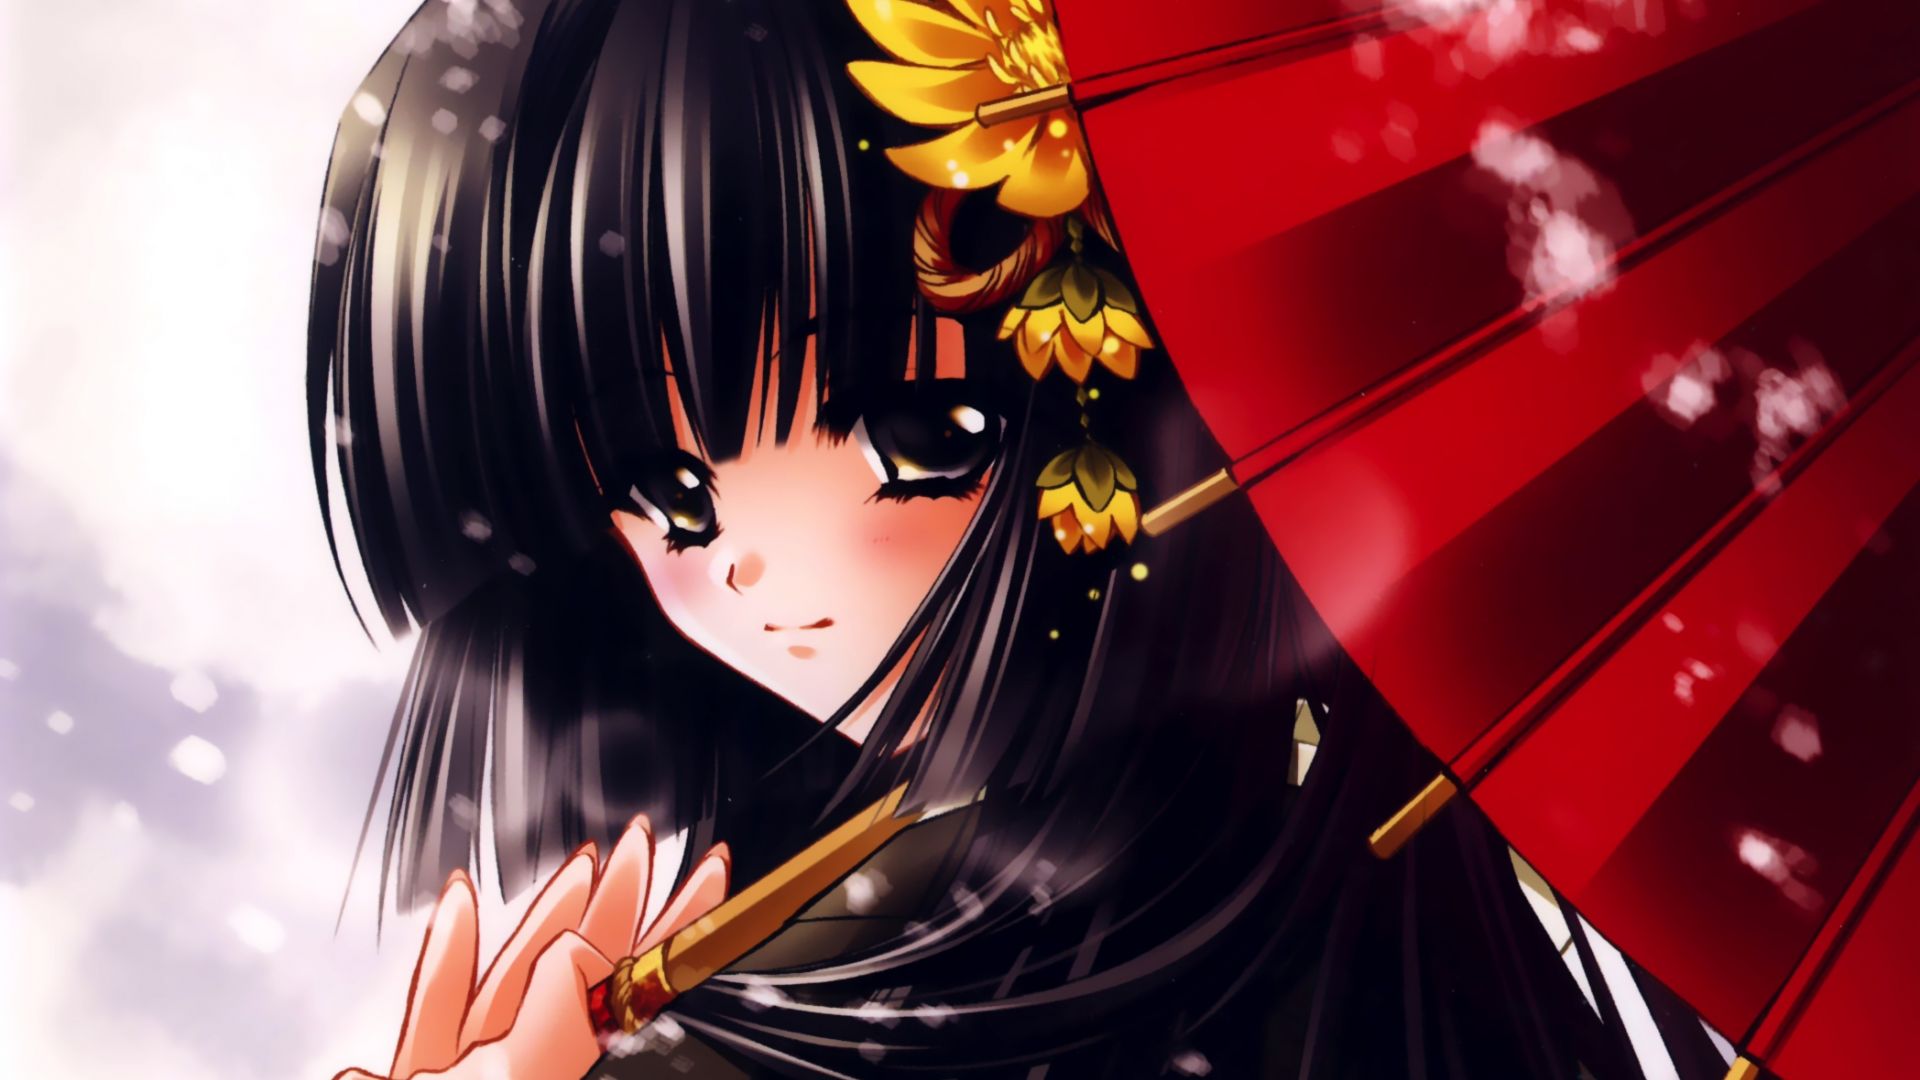 Wallpaper Cute anime girl, red umbrella, original